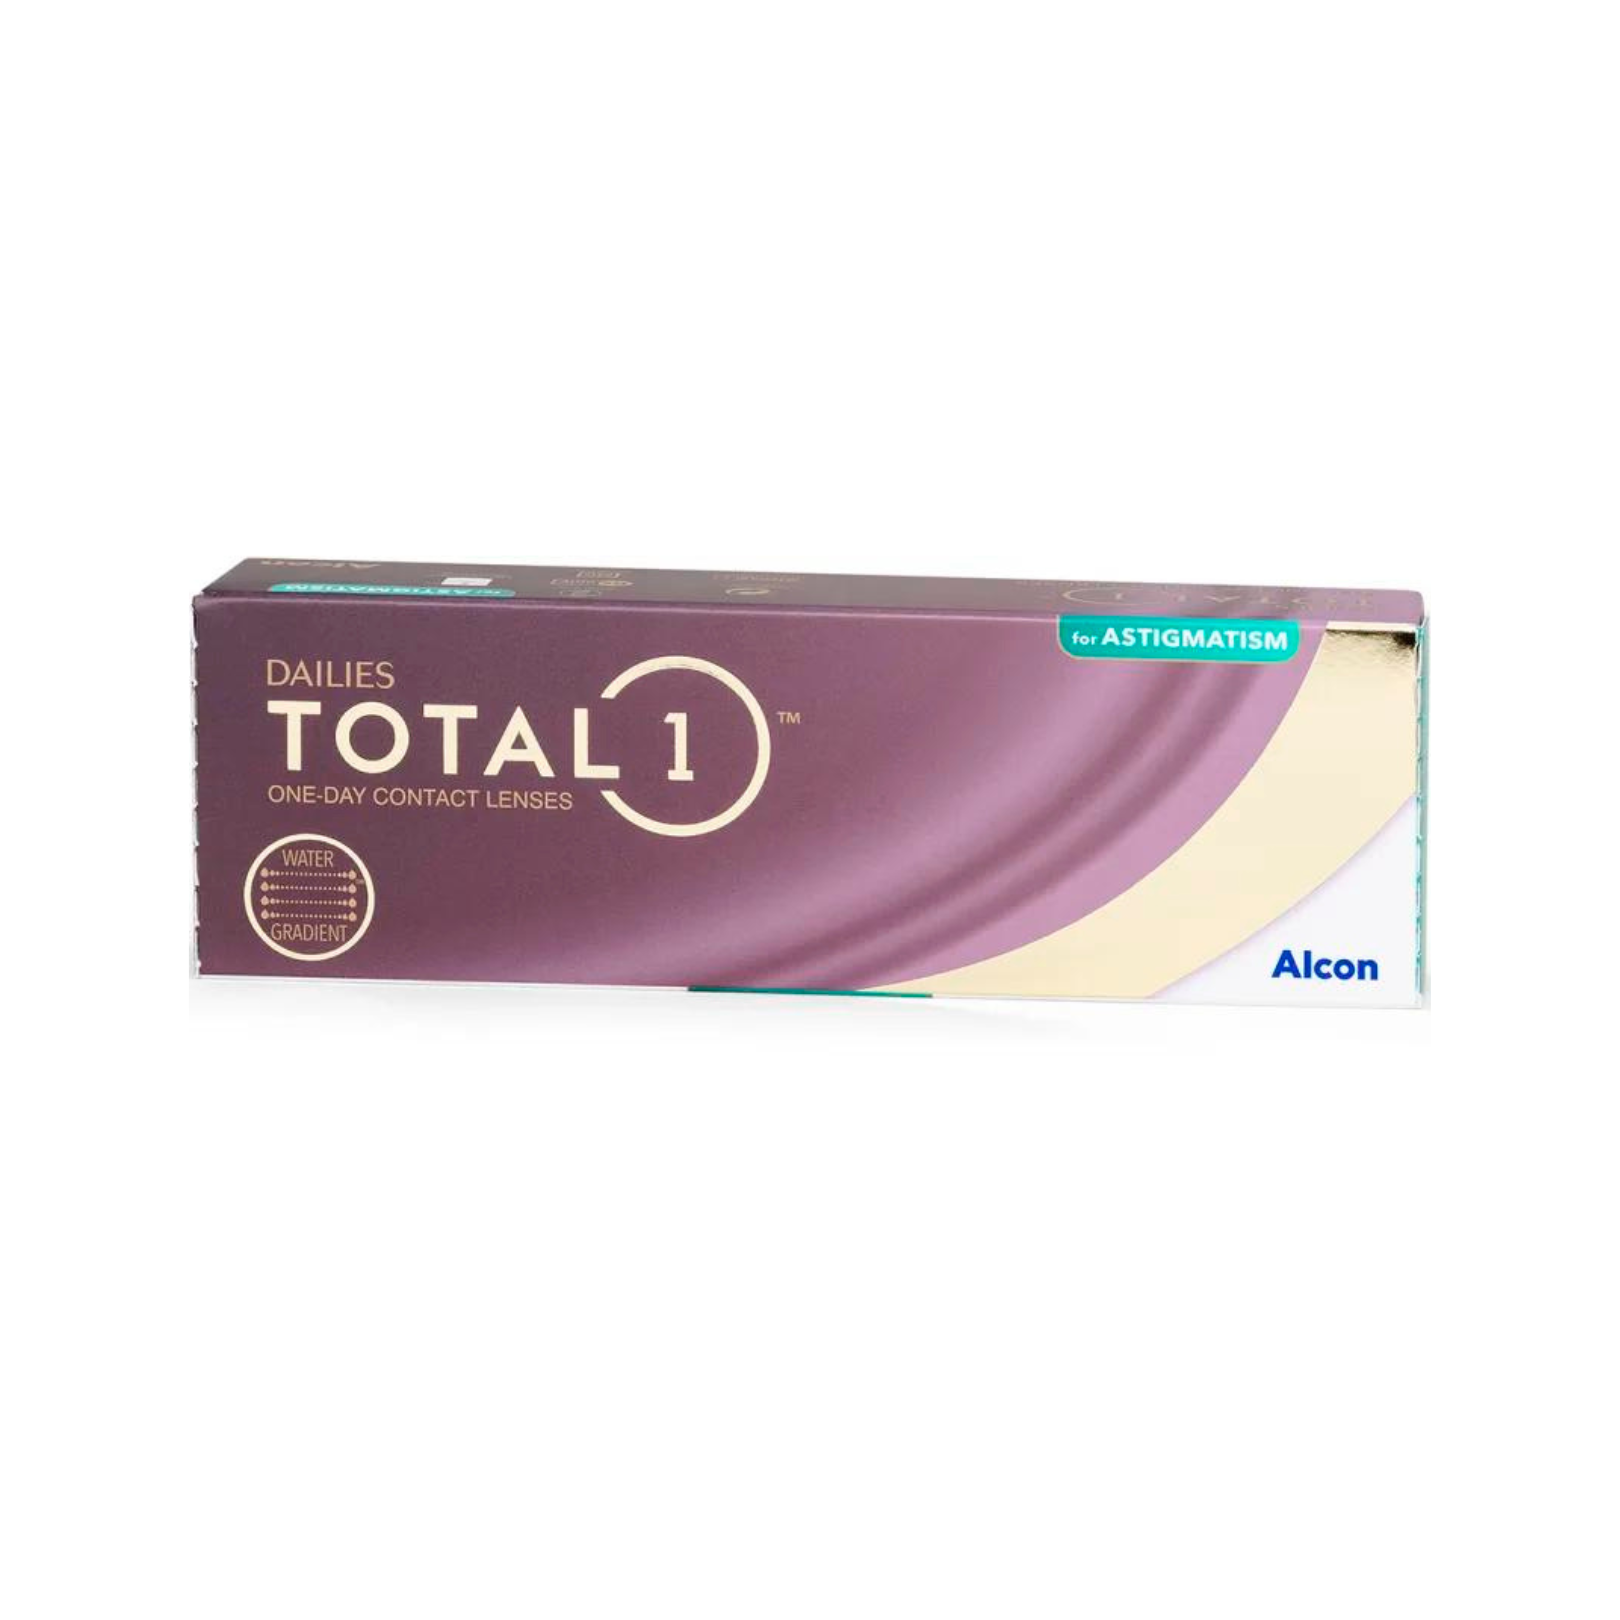 Dailies Total 1 Toric, for Astigmatism, endagslinser - 30 / 90 pack